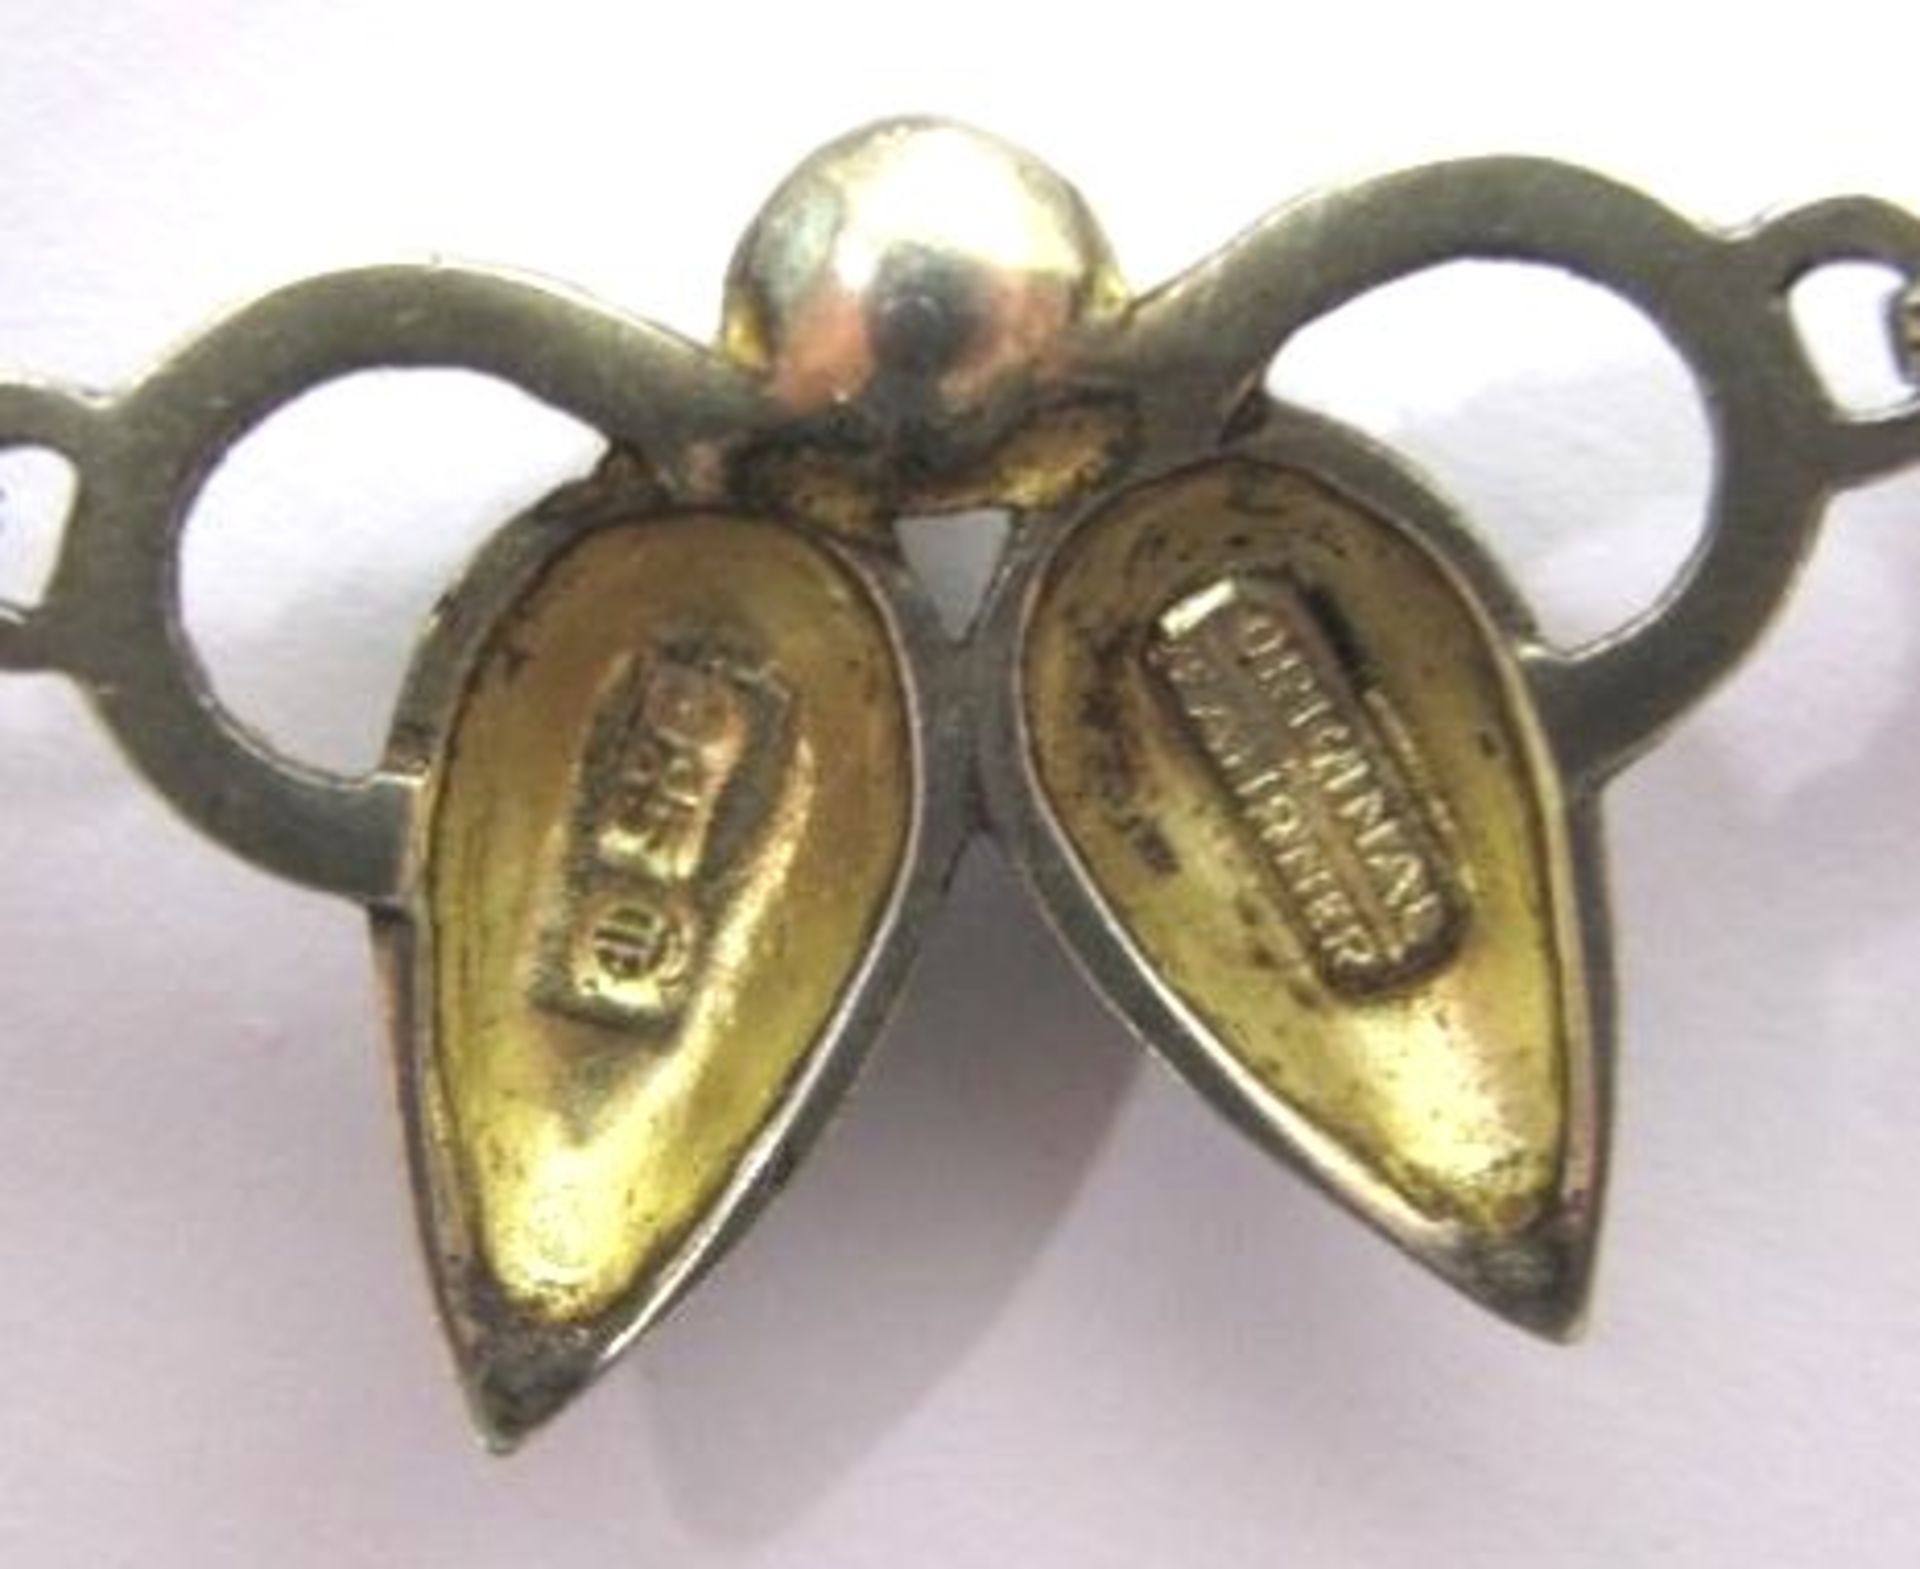 Collier "Original Fahner", 925er Silber vergoldet, Markasiten u. Perlenbesatz, älter, 23,3g, L- - Bild 3 aus 3